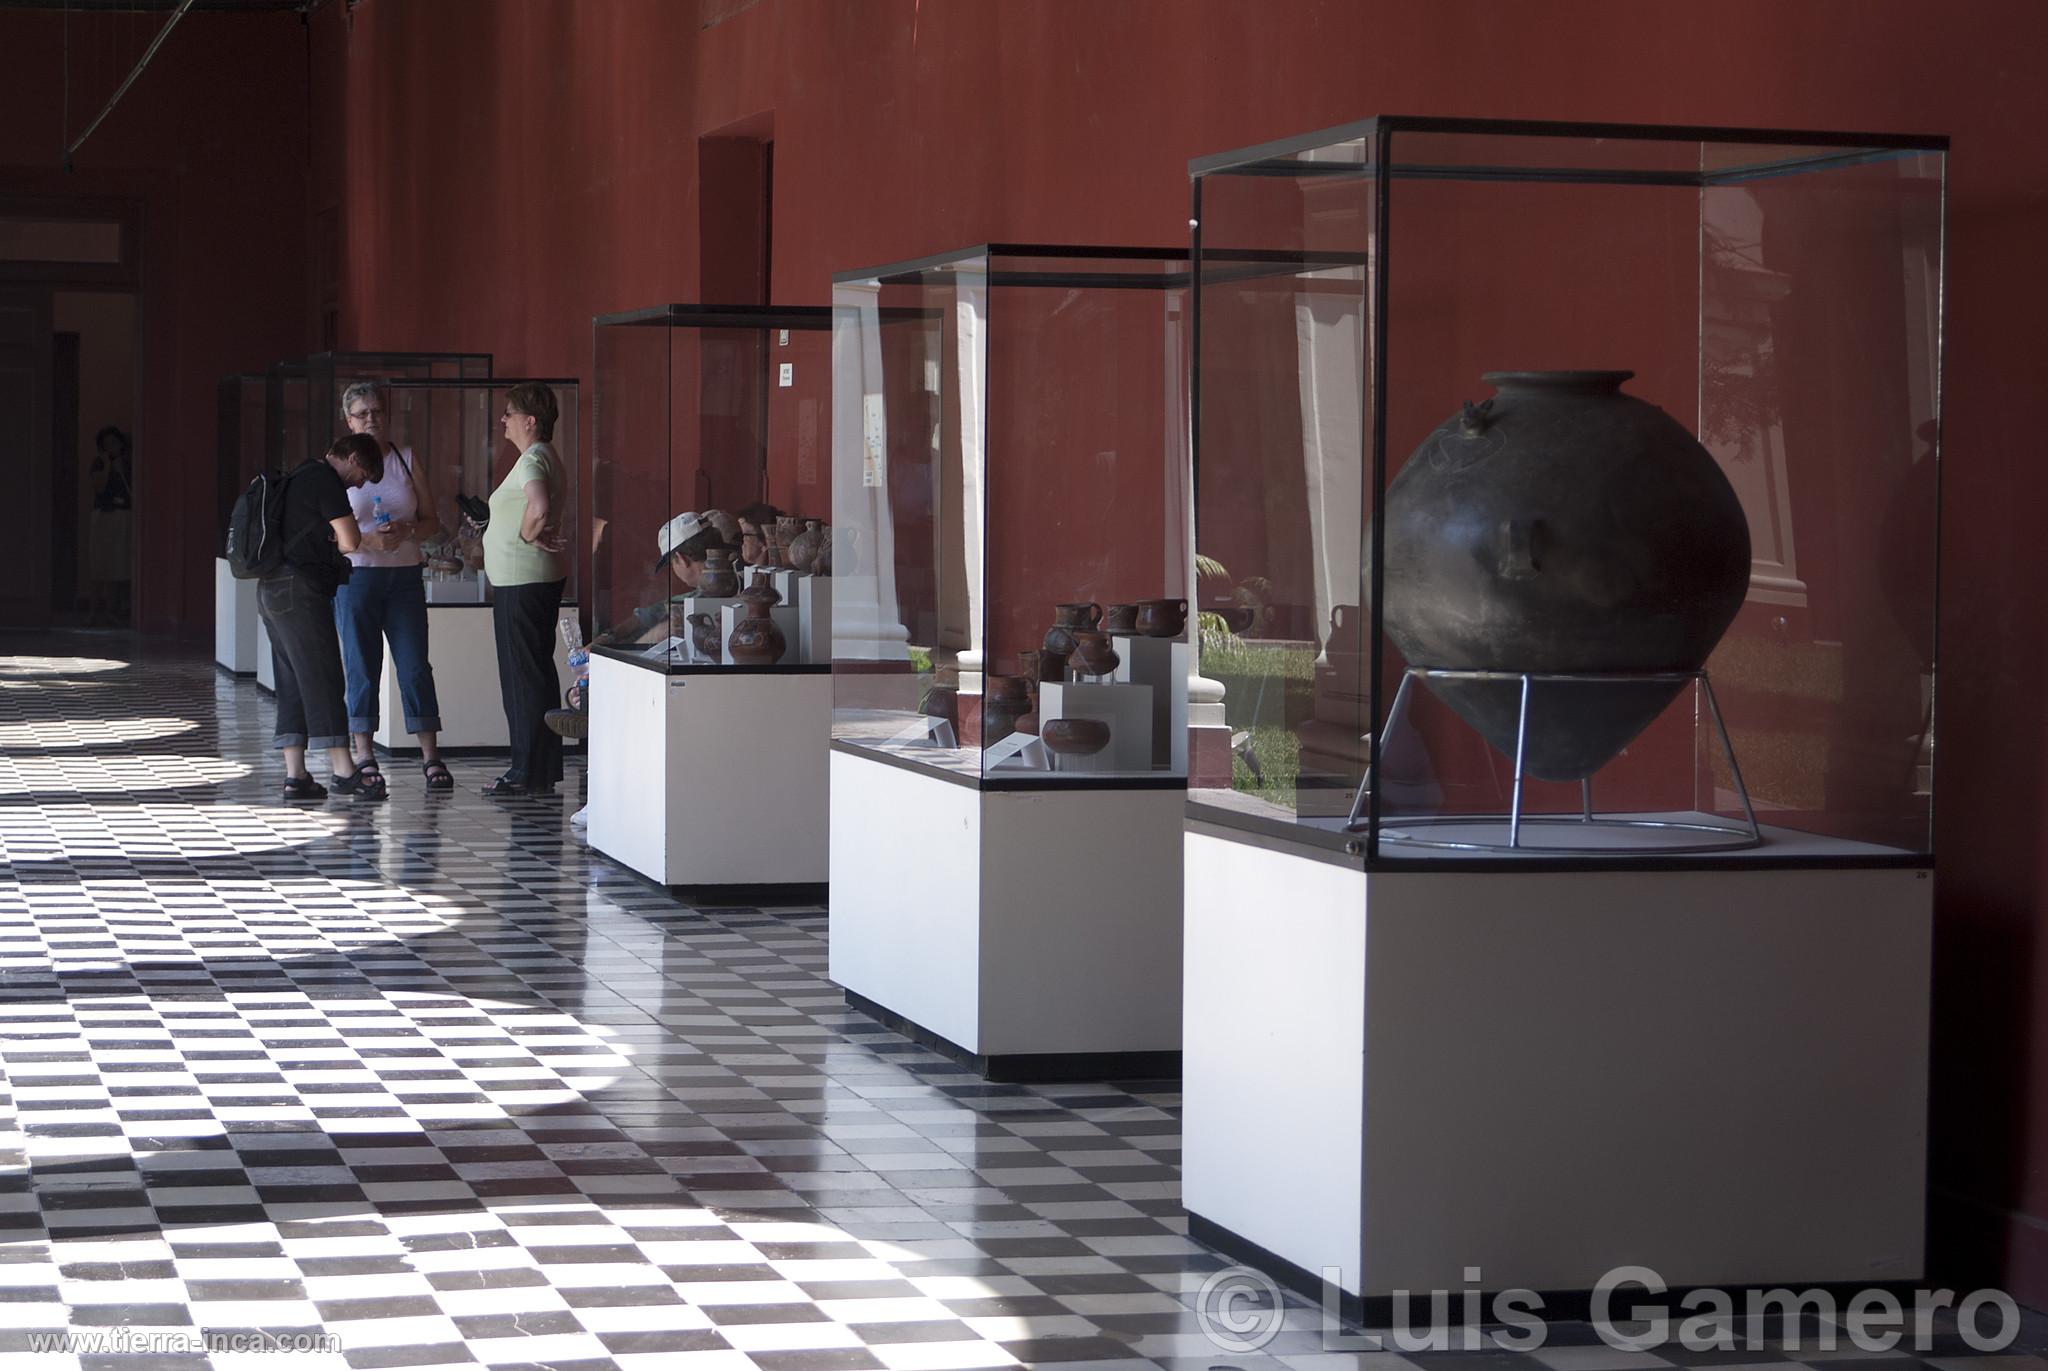 Museo Nacional de Arqueologa, Antropologa e Historia del Per